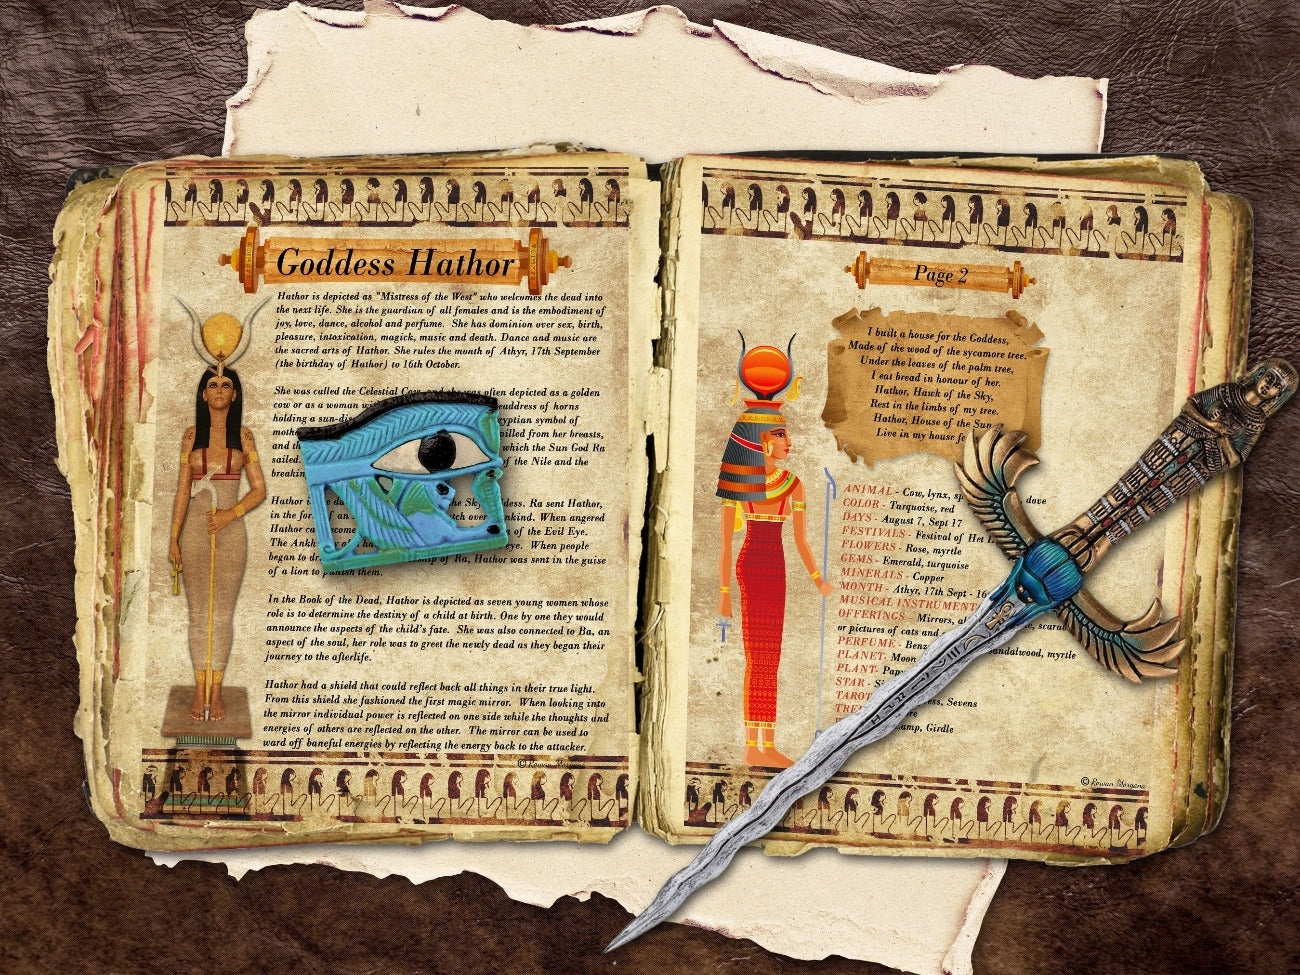 GODDESS HATHOR 4 Pages, Egyptian Goddess Magic Correspondences, Hathor Prayer Chant Mythology, Cow Deity, Altar Guide, Printable Grimore - Morgana Magick Spell